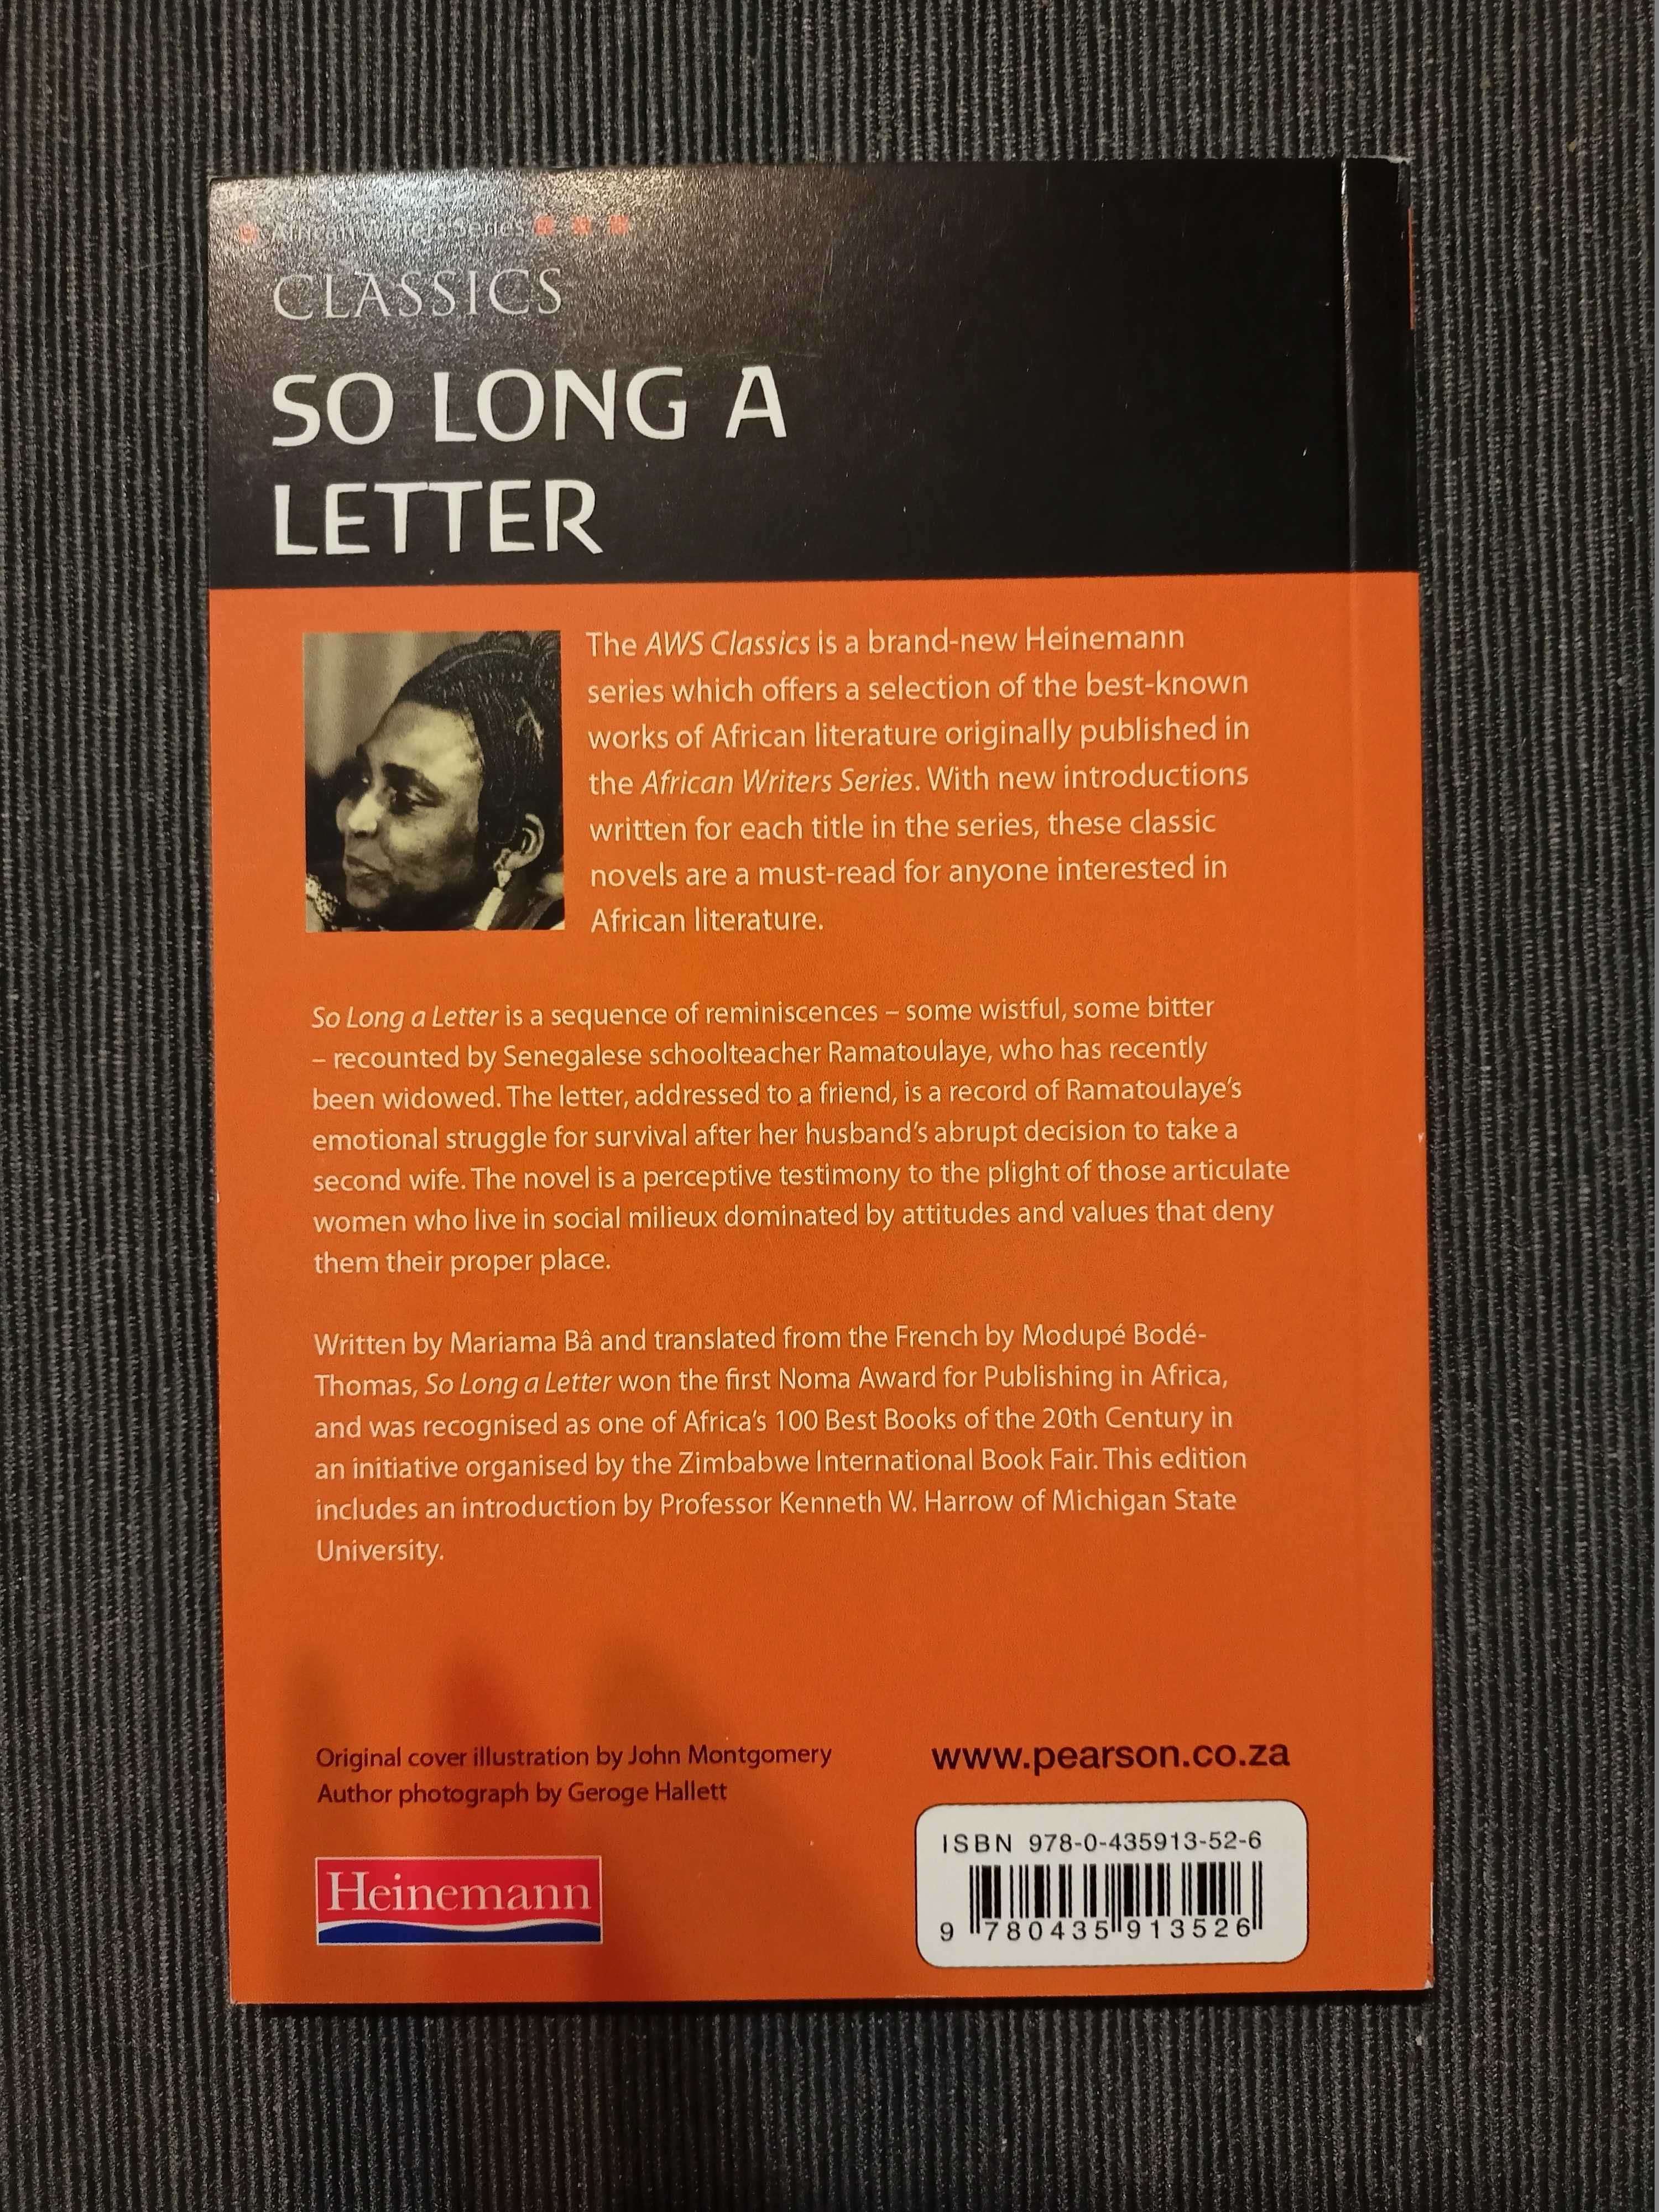 So long a letter